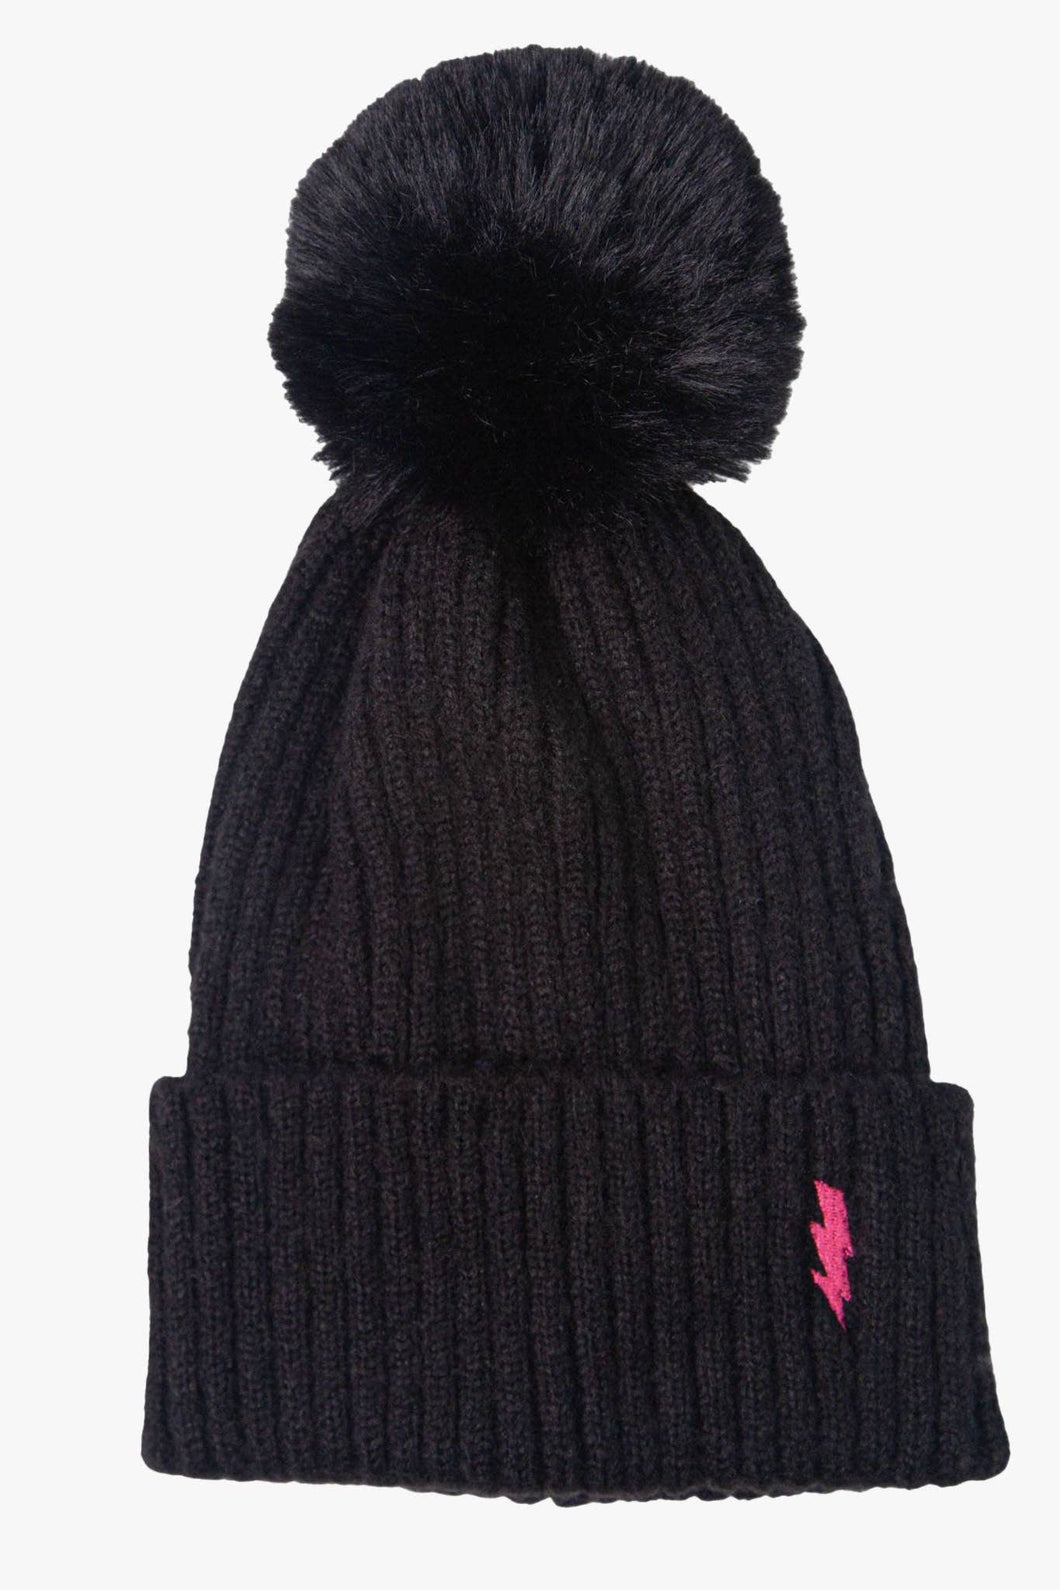 Black Rib Knit Hat with Embroidered Fuchsia Lightning Bolt